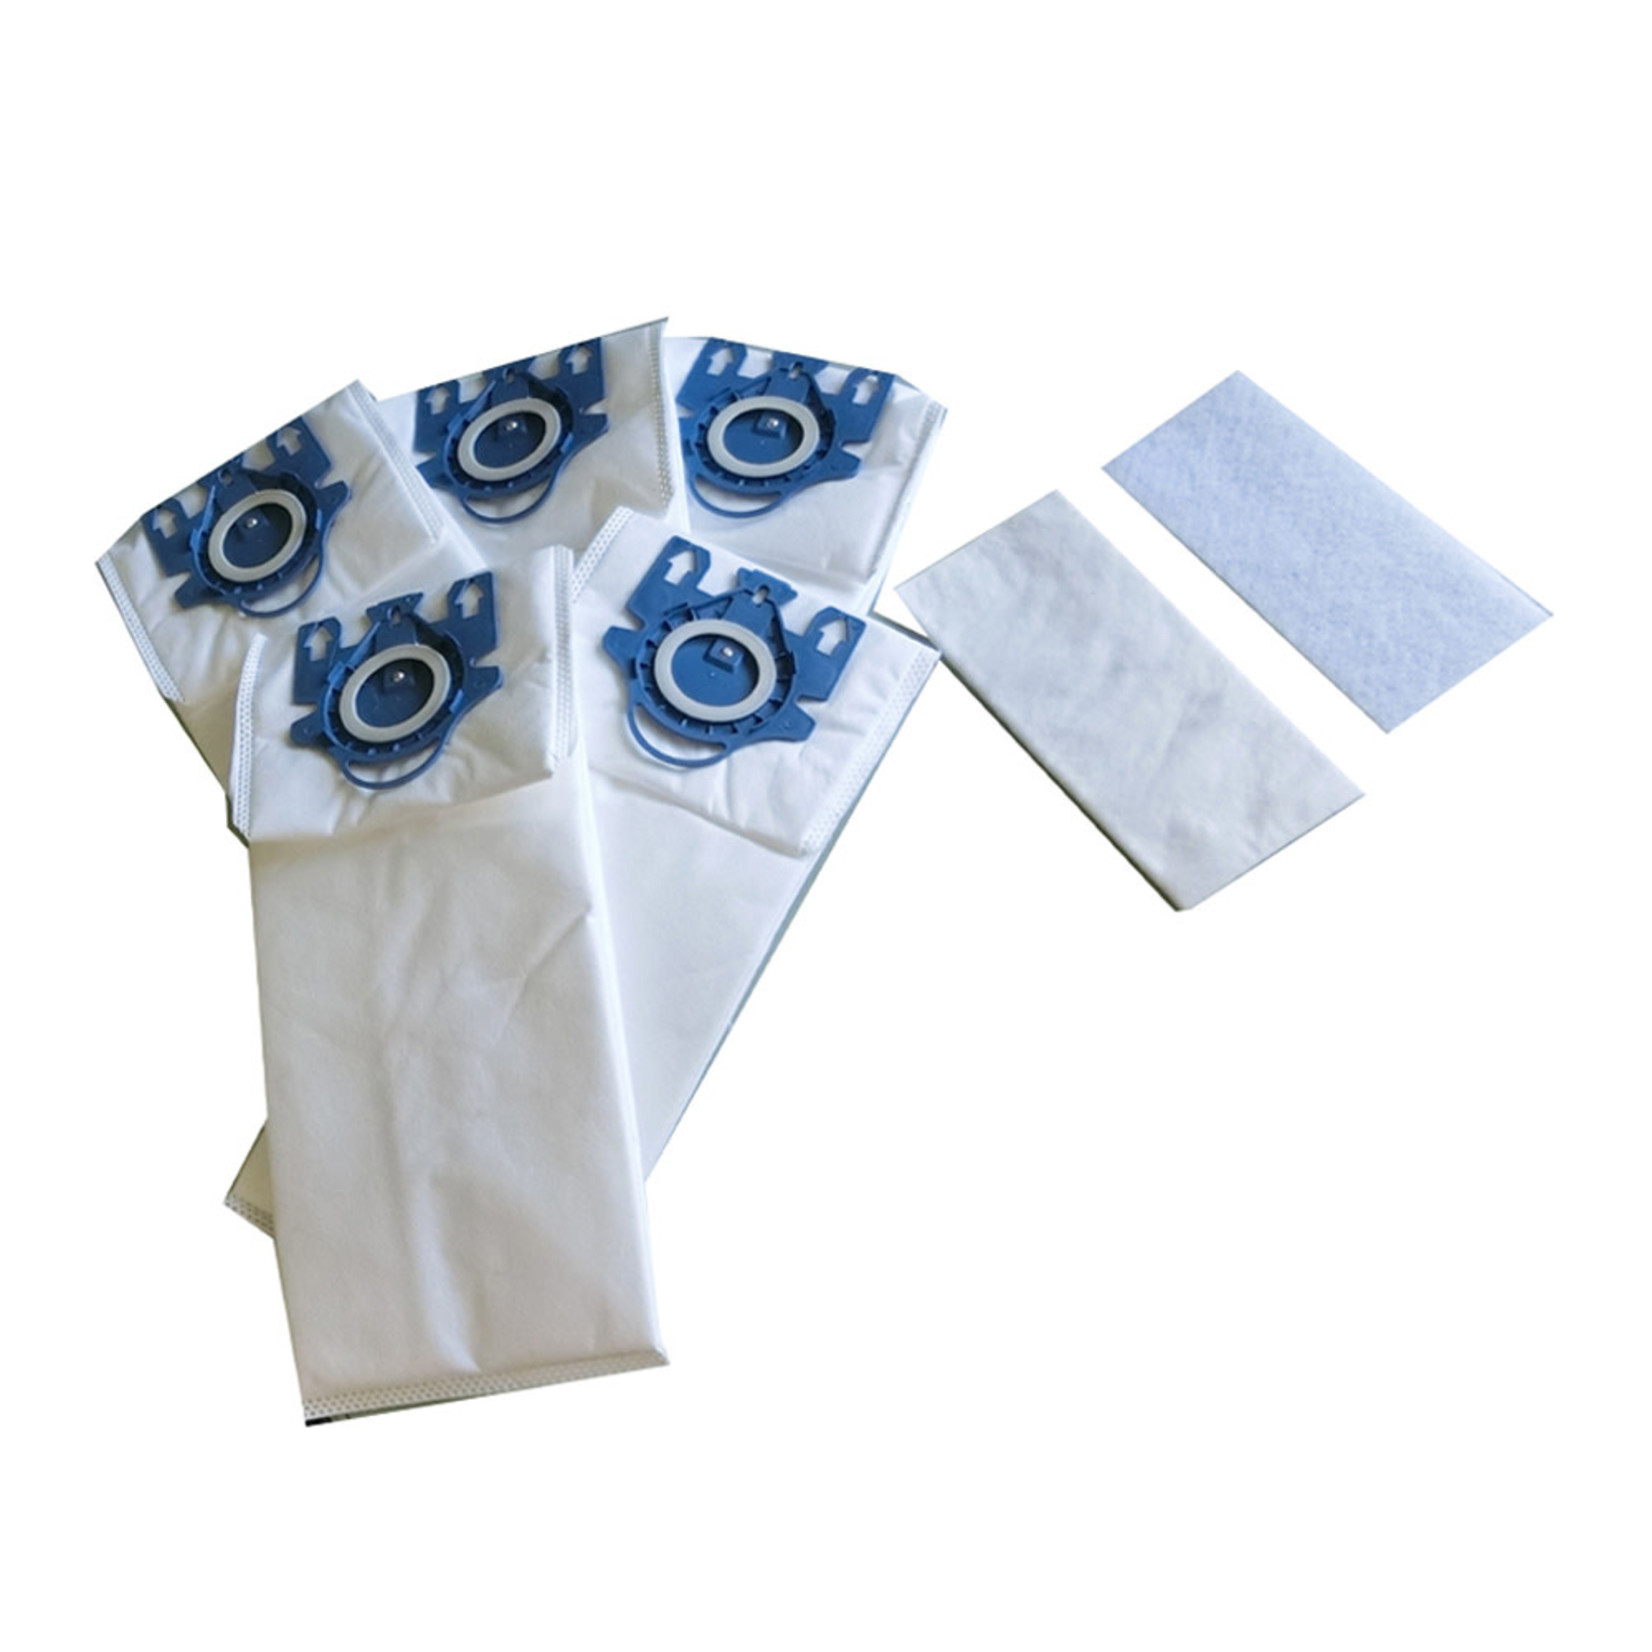 Miele DVC Miele Style "U" Cloth Bag (5pk & 2 Filter)